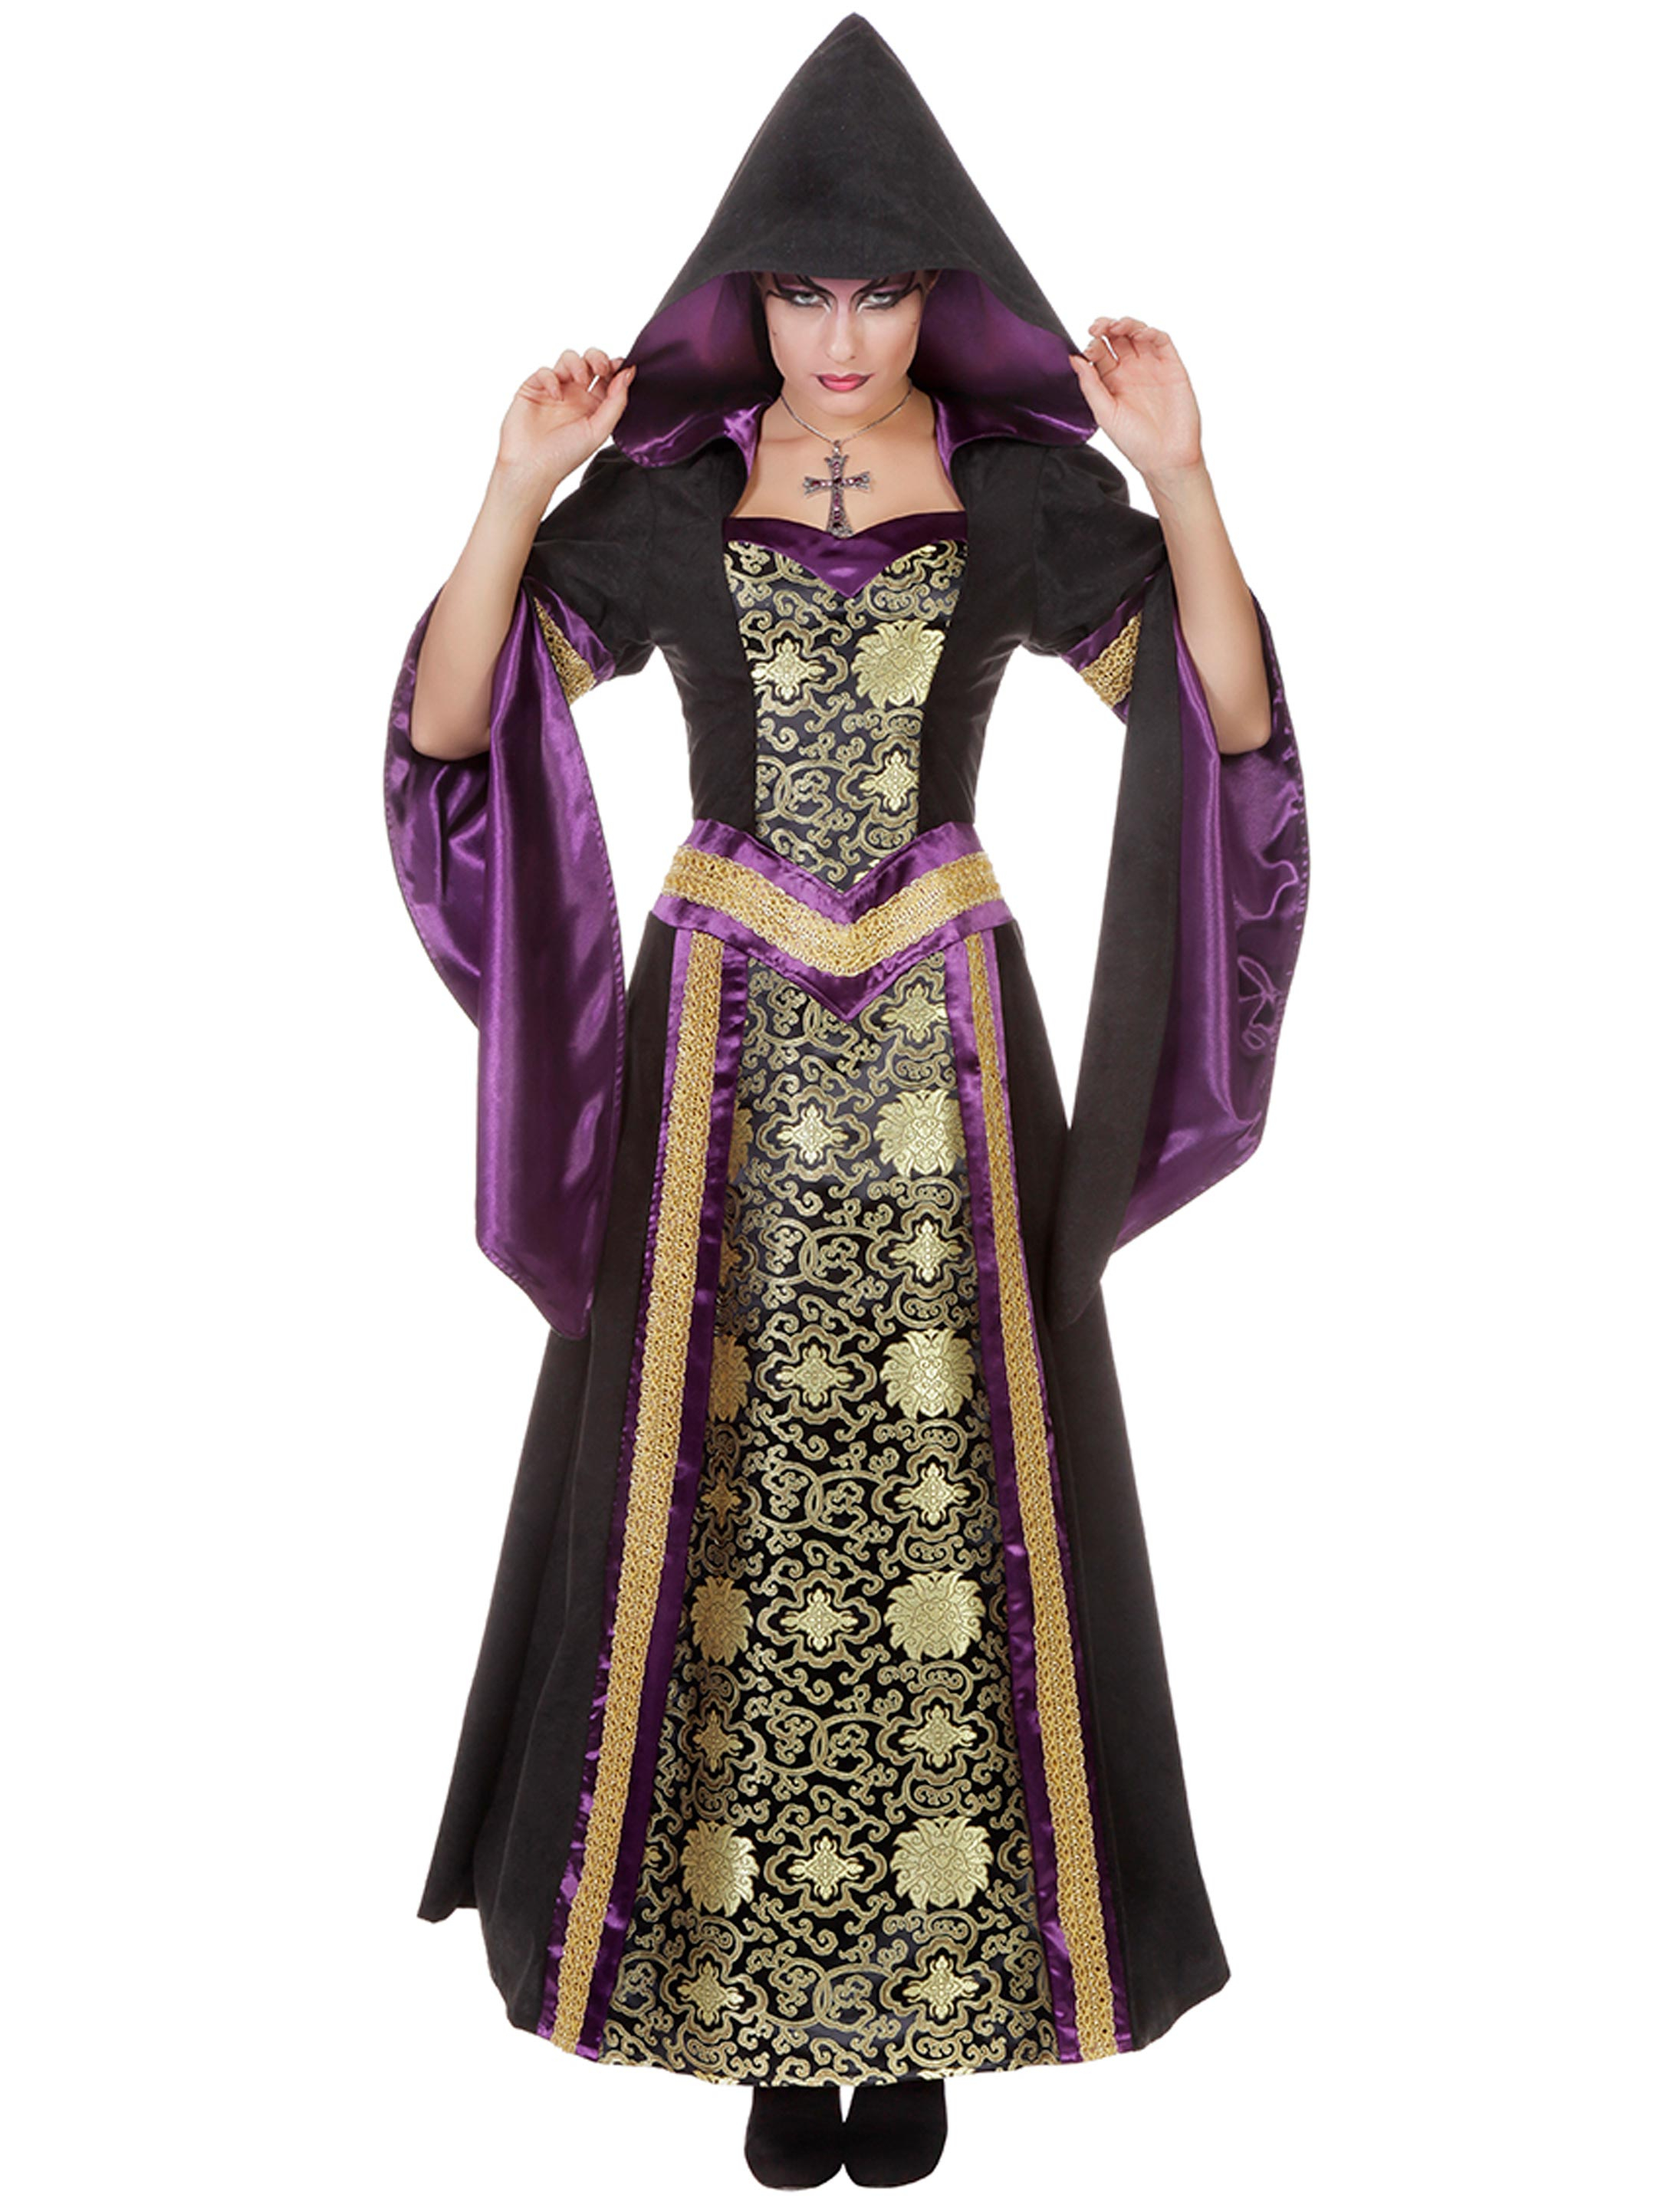 Kleid Gothic deluxe schwarz/lila 40